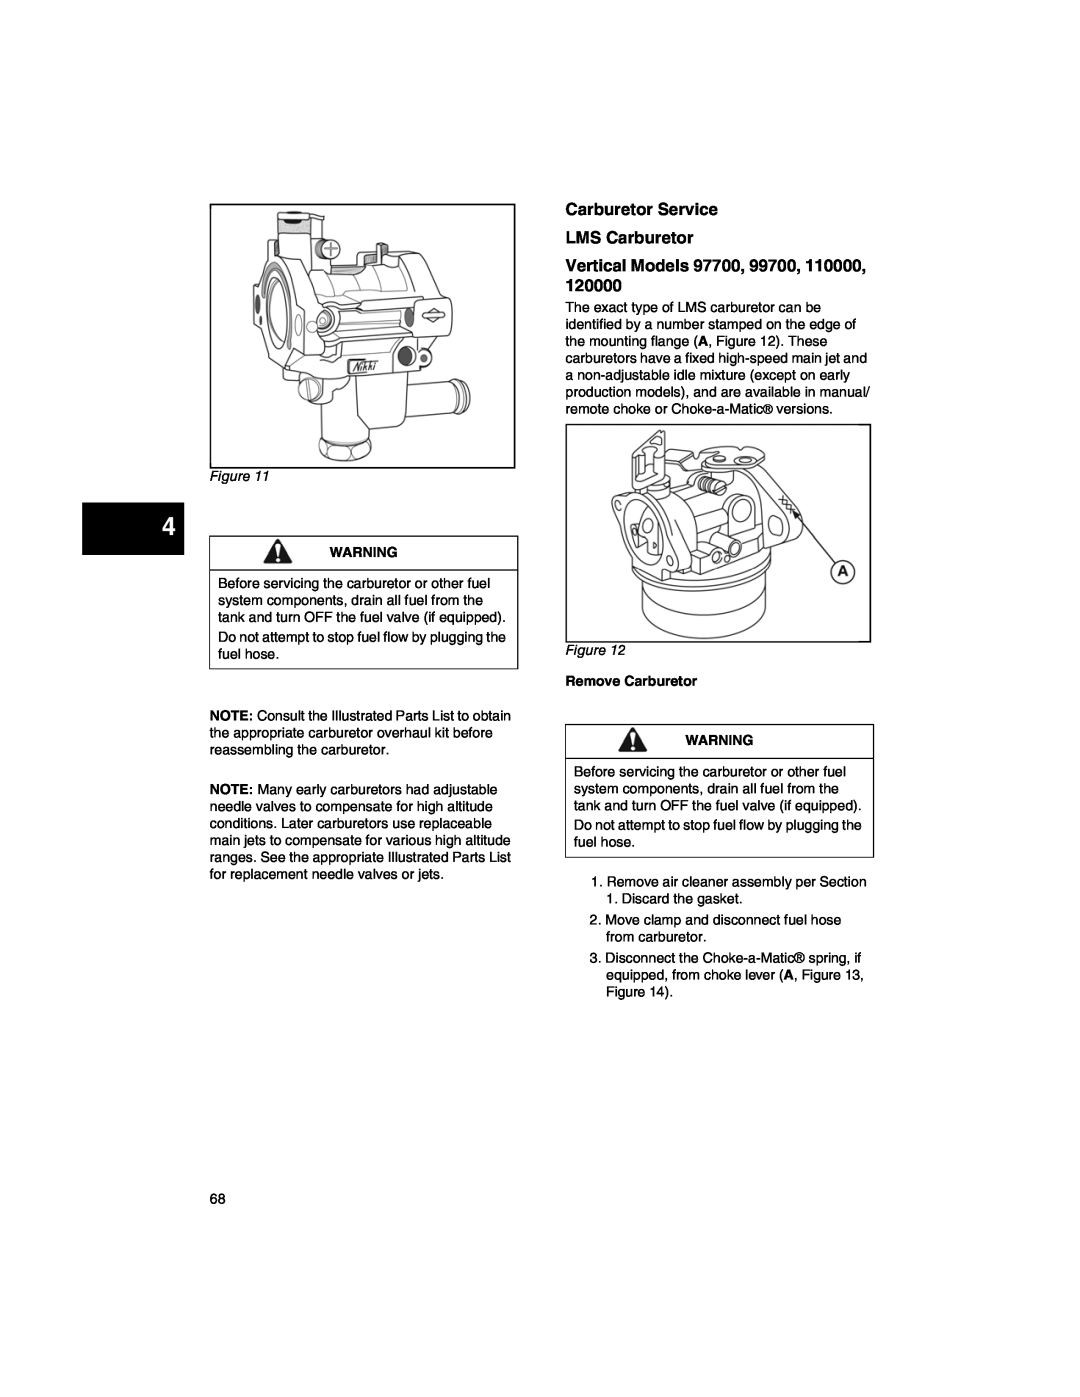 Briggs & Stratton 270962 manual Carburetor Service LMS Carburetor, Vertical Models 97700, 99700, 110000, Remove Carburetor 